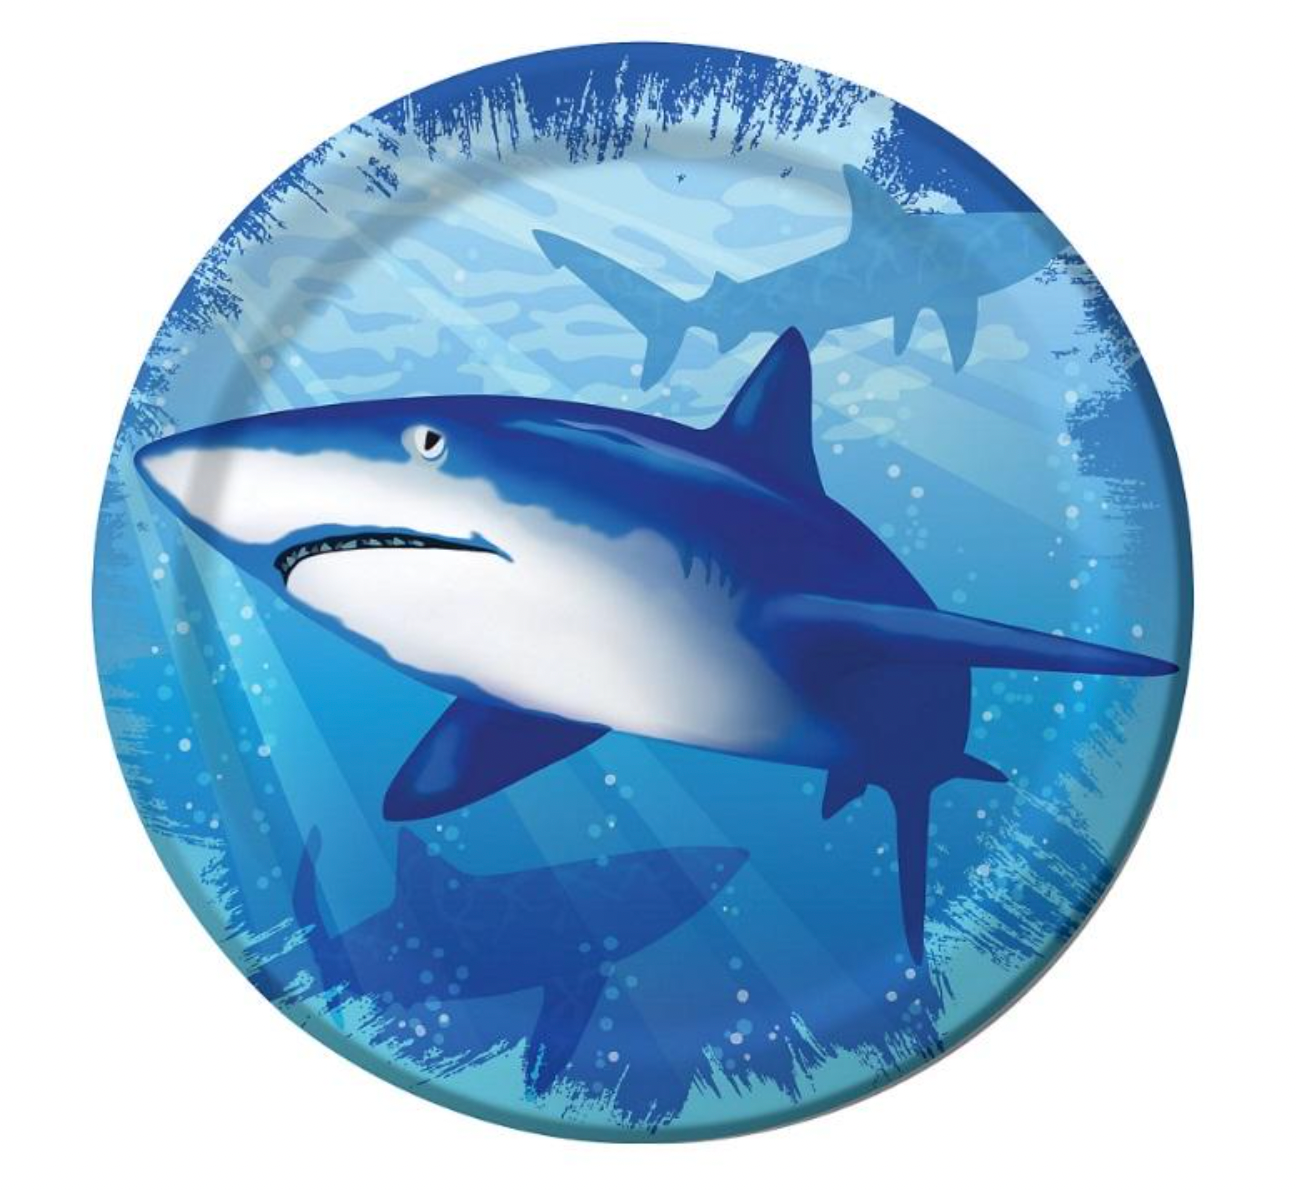 Shark themed party plates